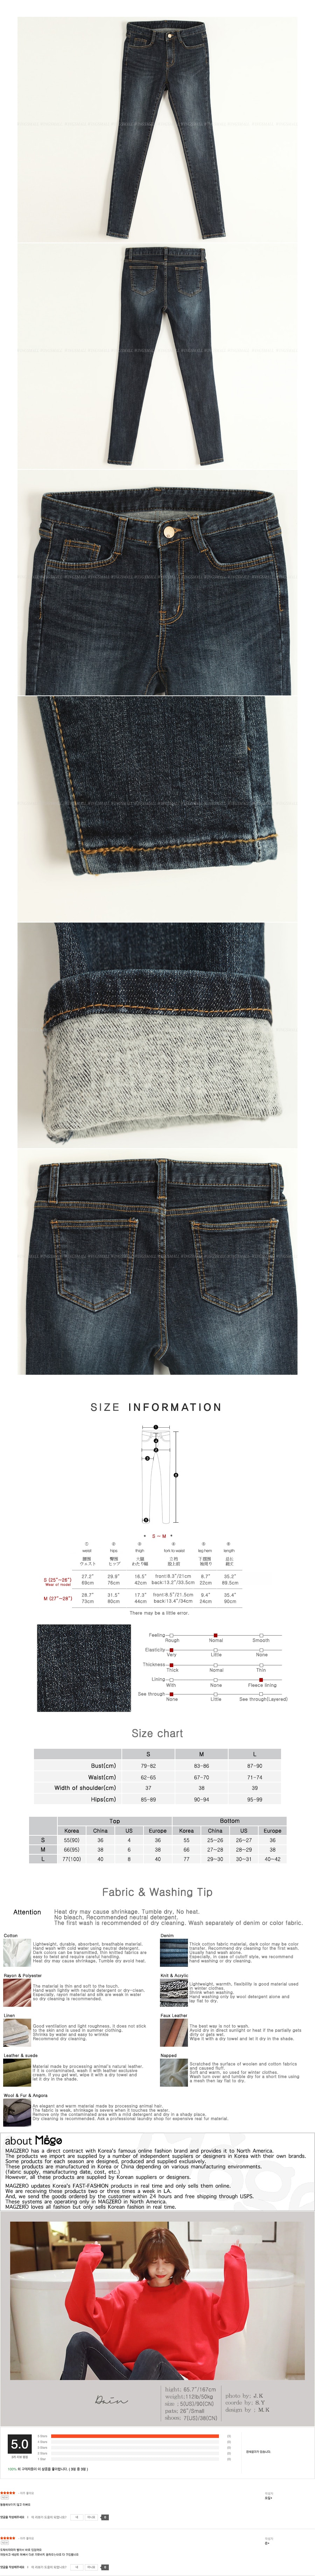 [KOREA] Fleece Lined Slim Skinny Jeans #Deep Blue M(27-28) [Free Shipping]